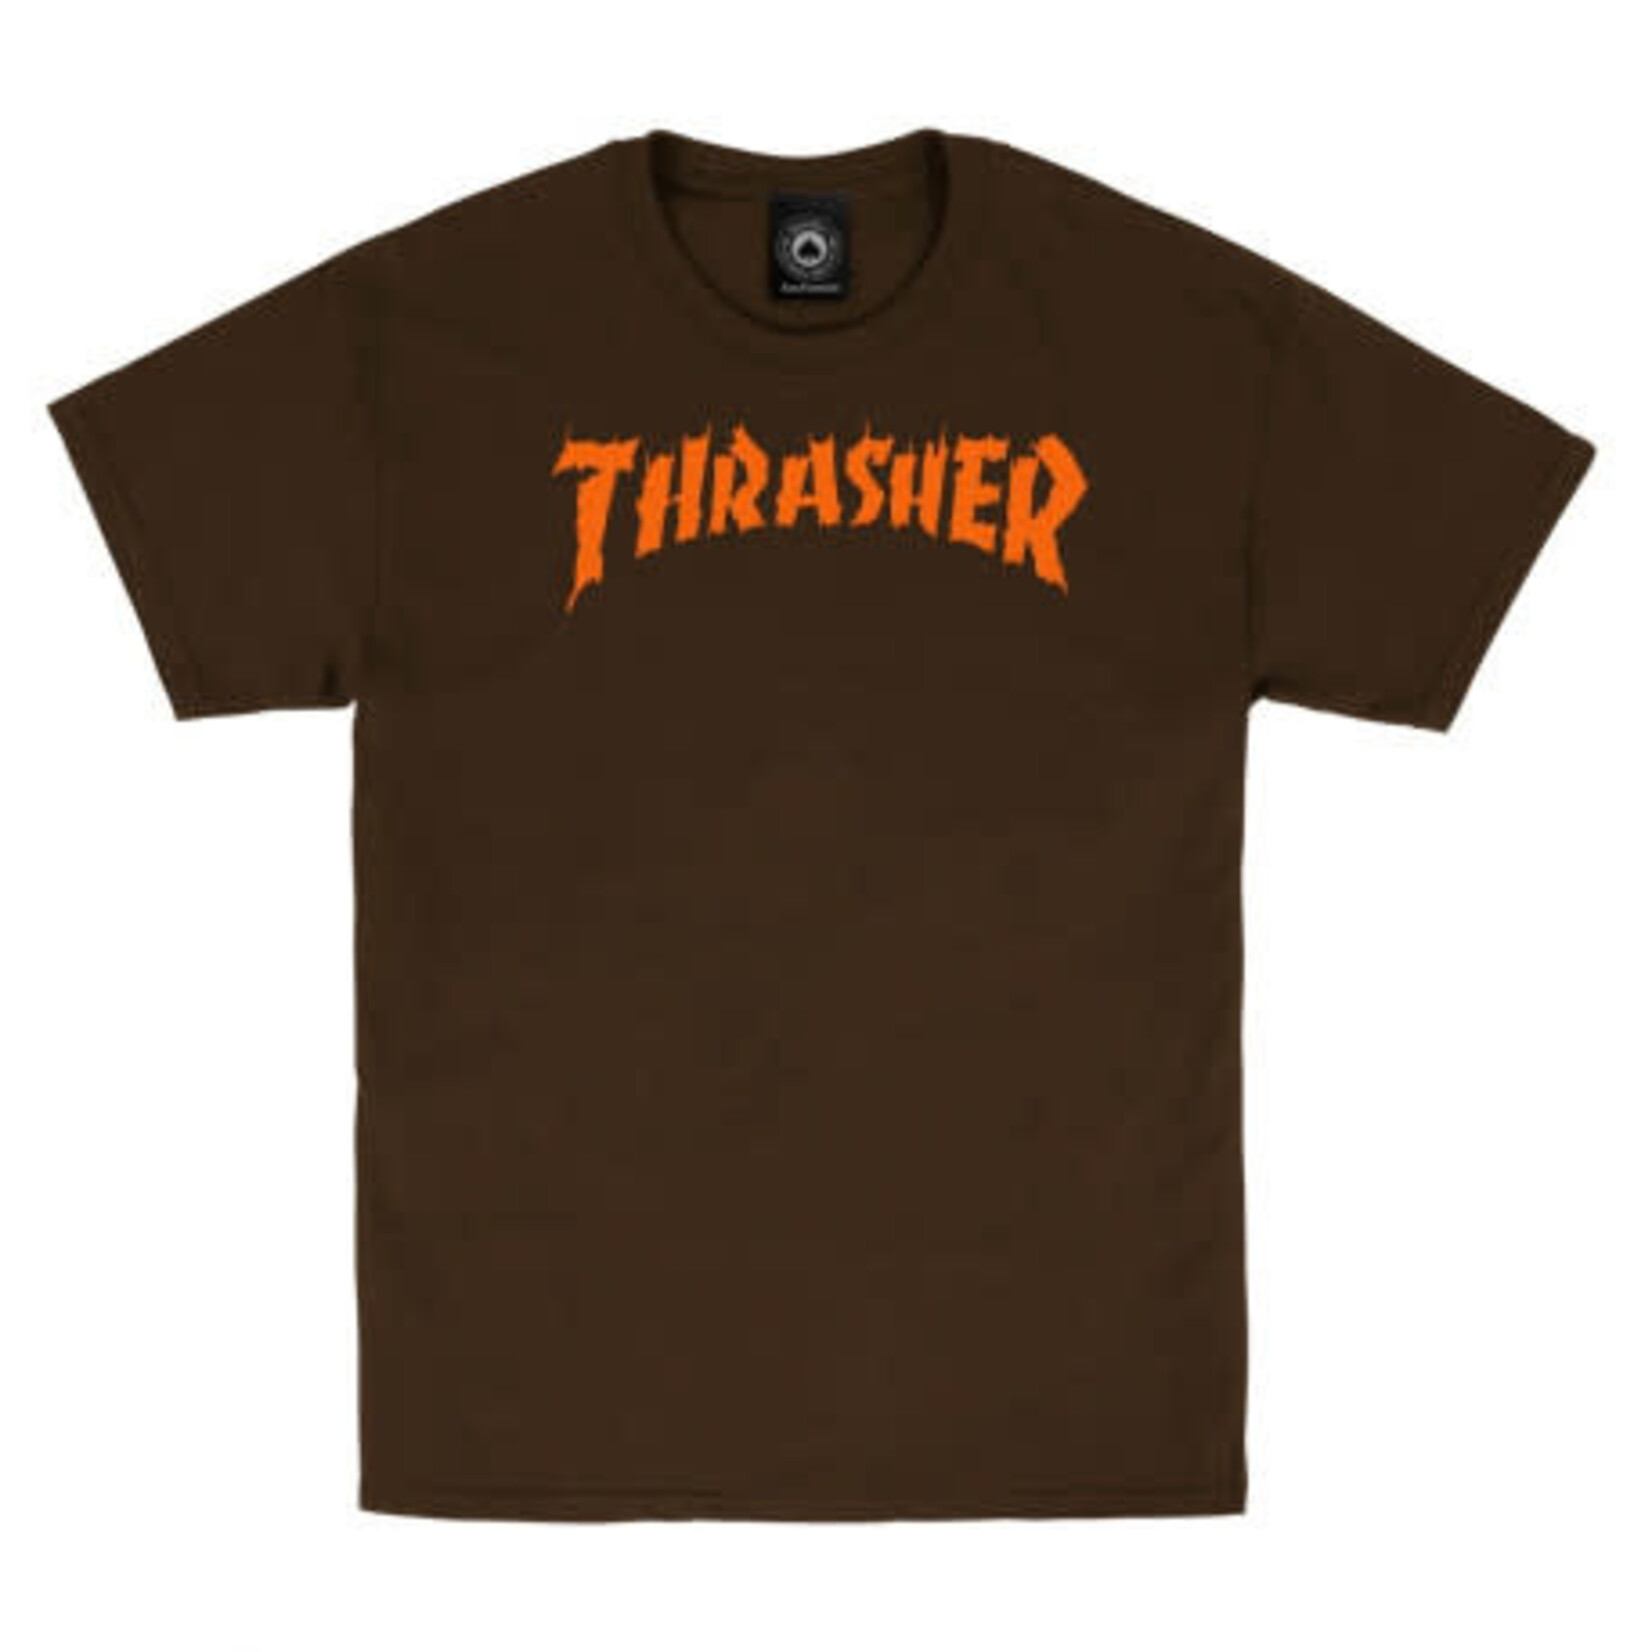 Thrasher THRASHER BURN IT DOWN - T-shirt - Dark Chocolate